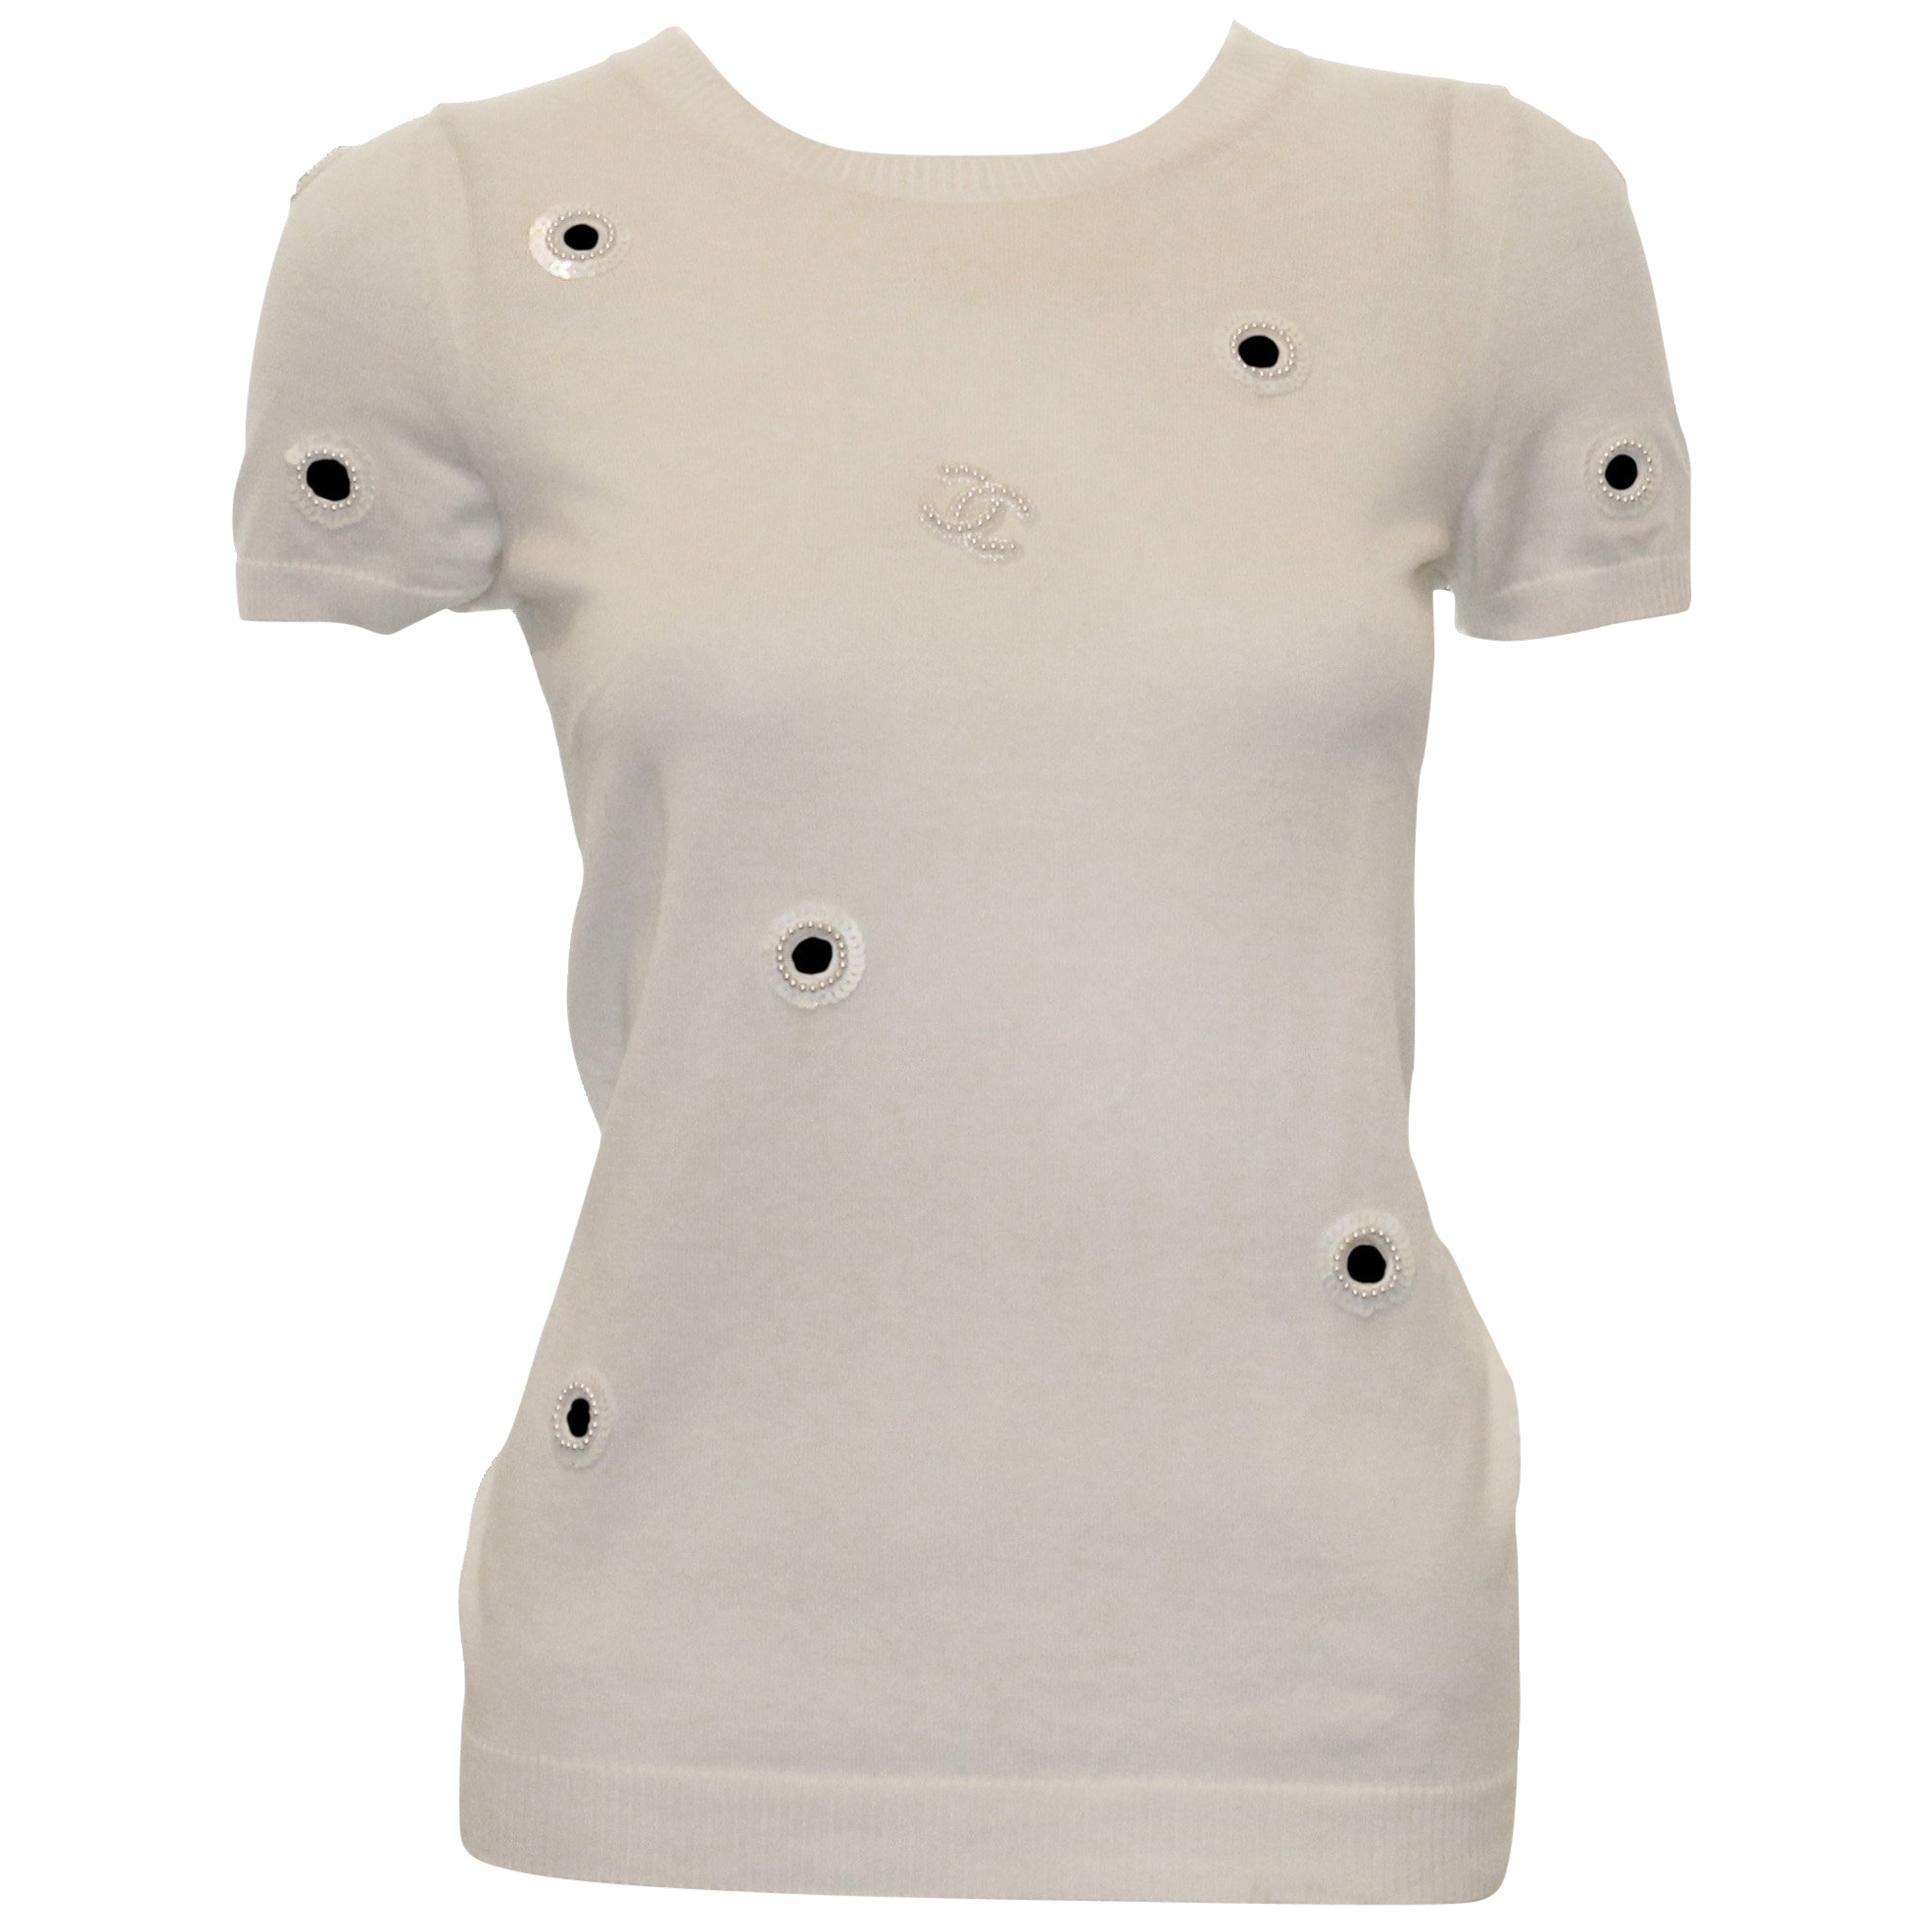 Chanel White Round Neckline Short Sleeve Top 2008  Spring Collection